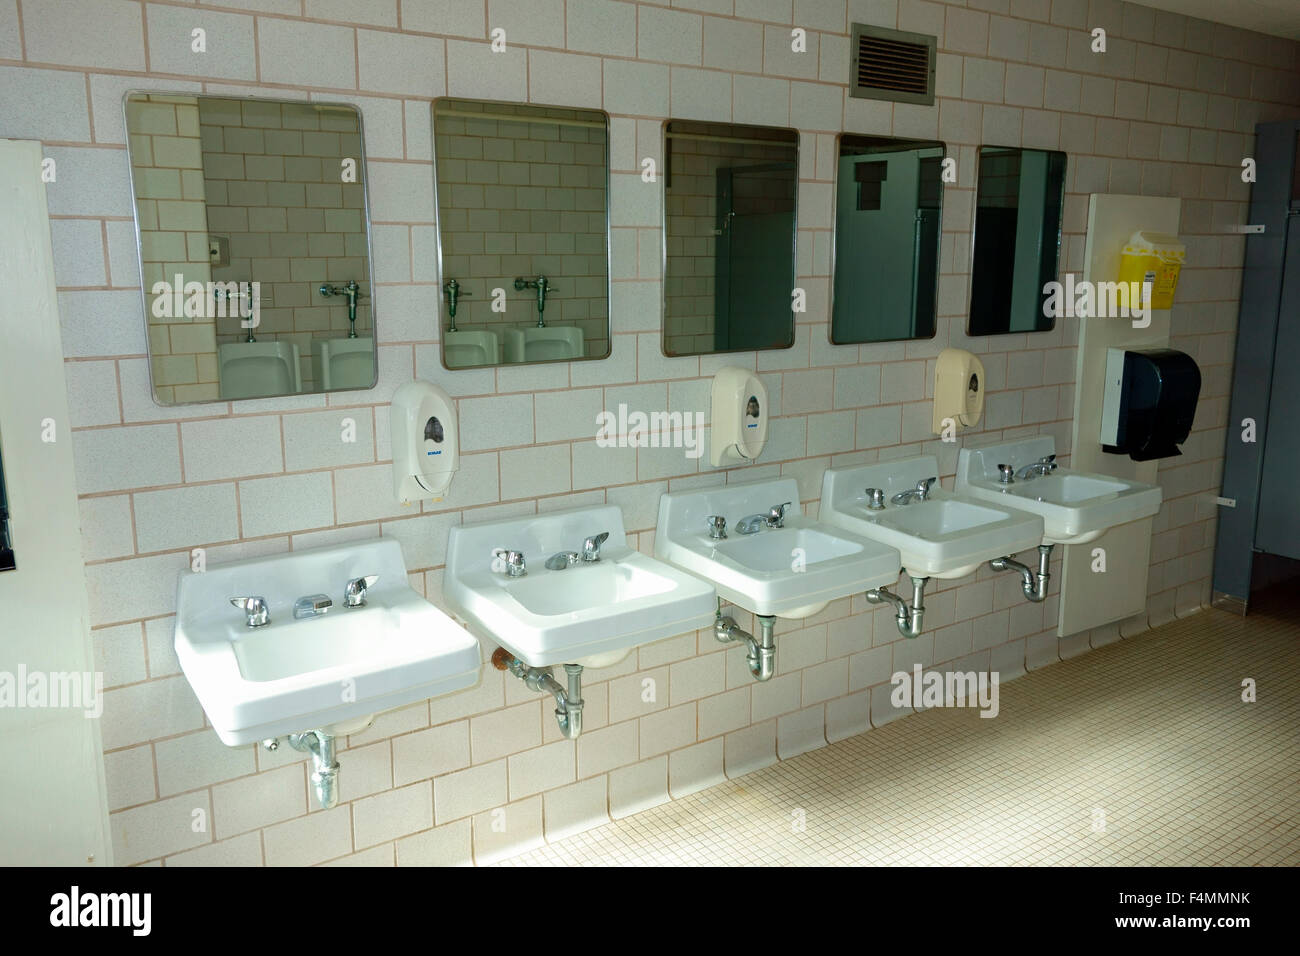 A row of sinks in a public washroom bathroom, restroom, latrine, comfort room, powder room, toilet room, W.C. Stock Photo